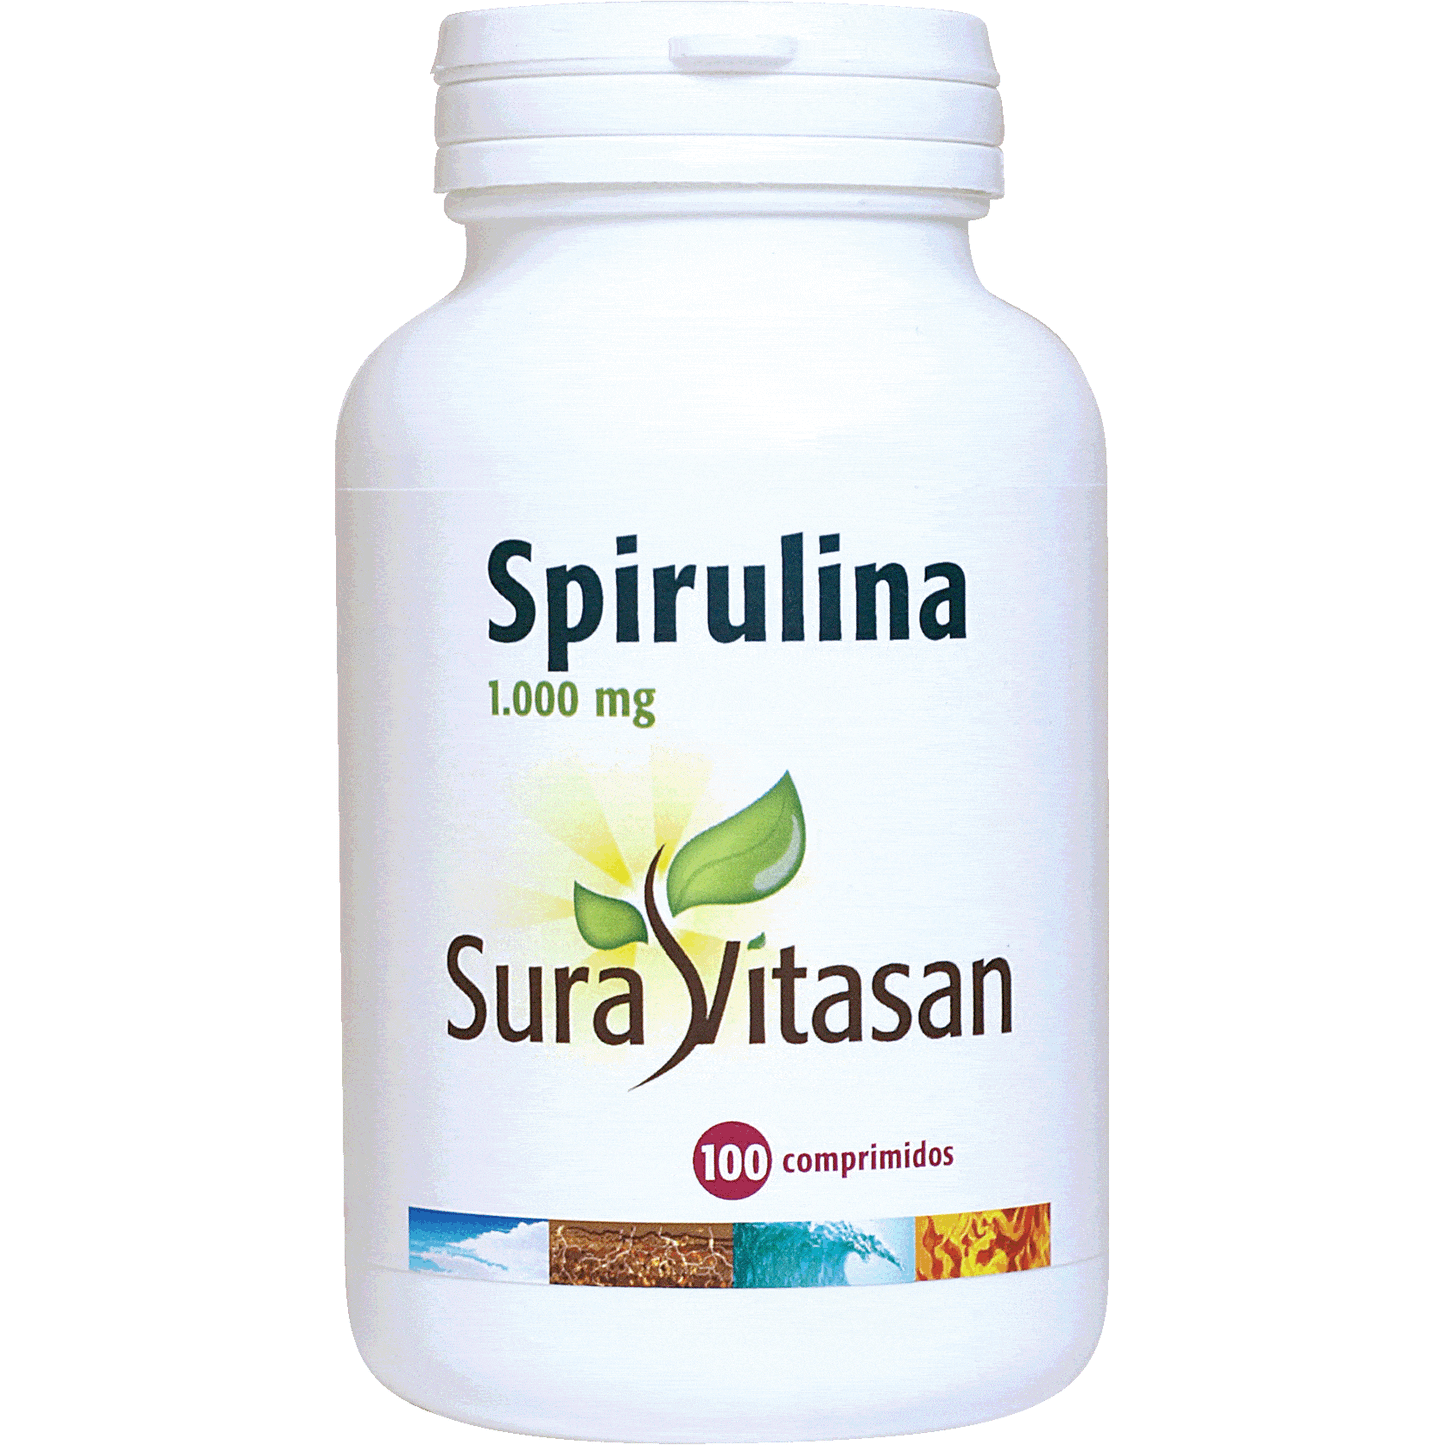 Spirulina 1000mg 100 Comprimidos | Sura Vitasan - Dietetica Ferrer